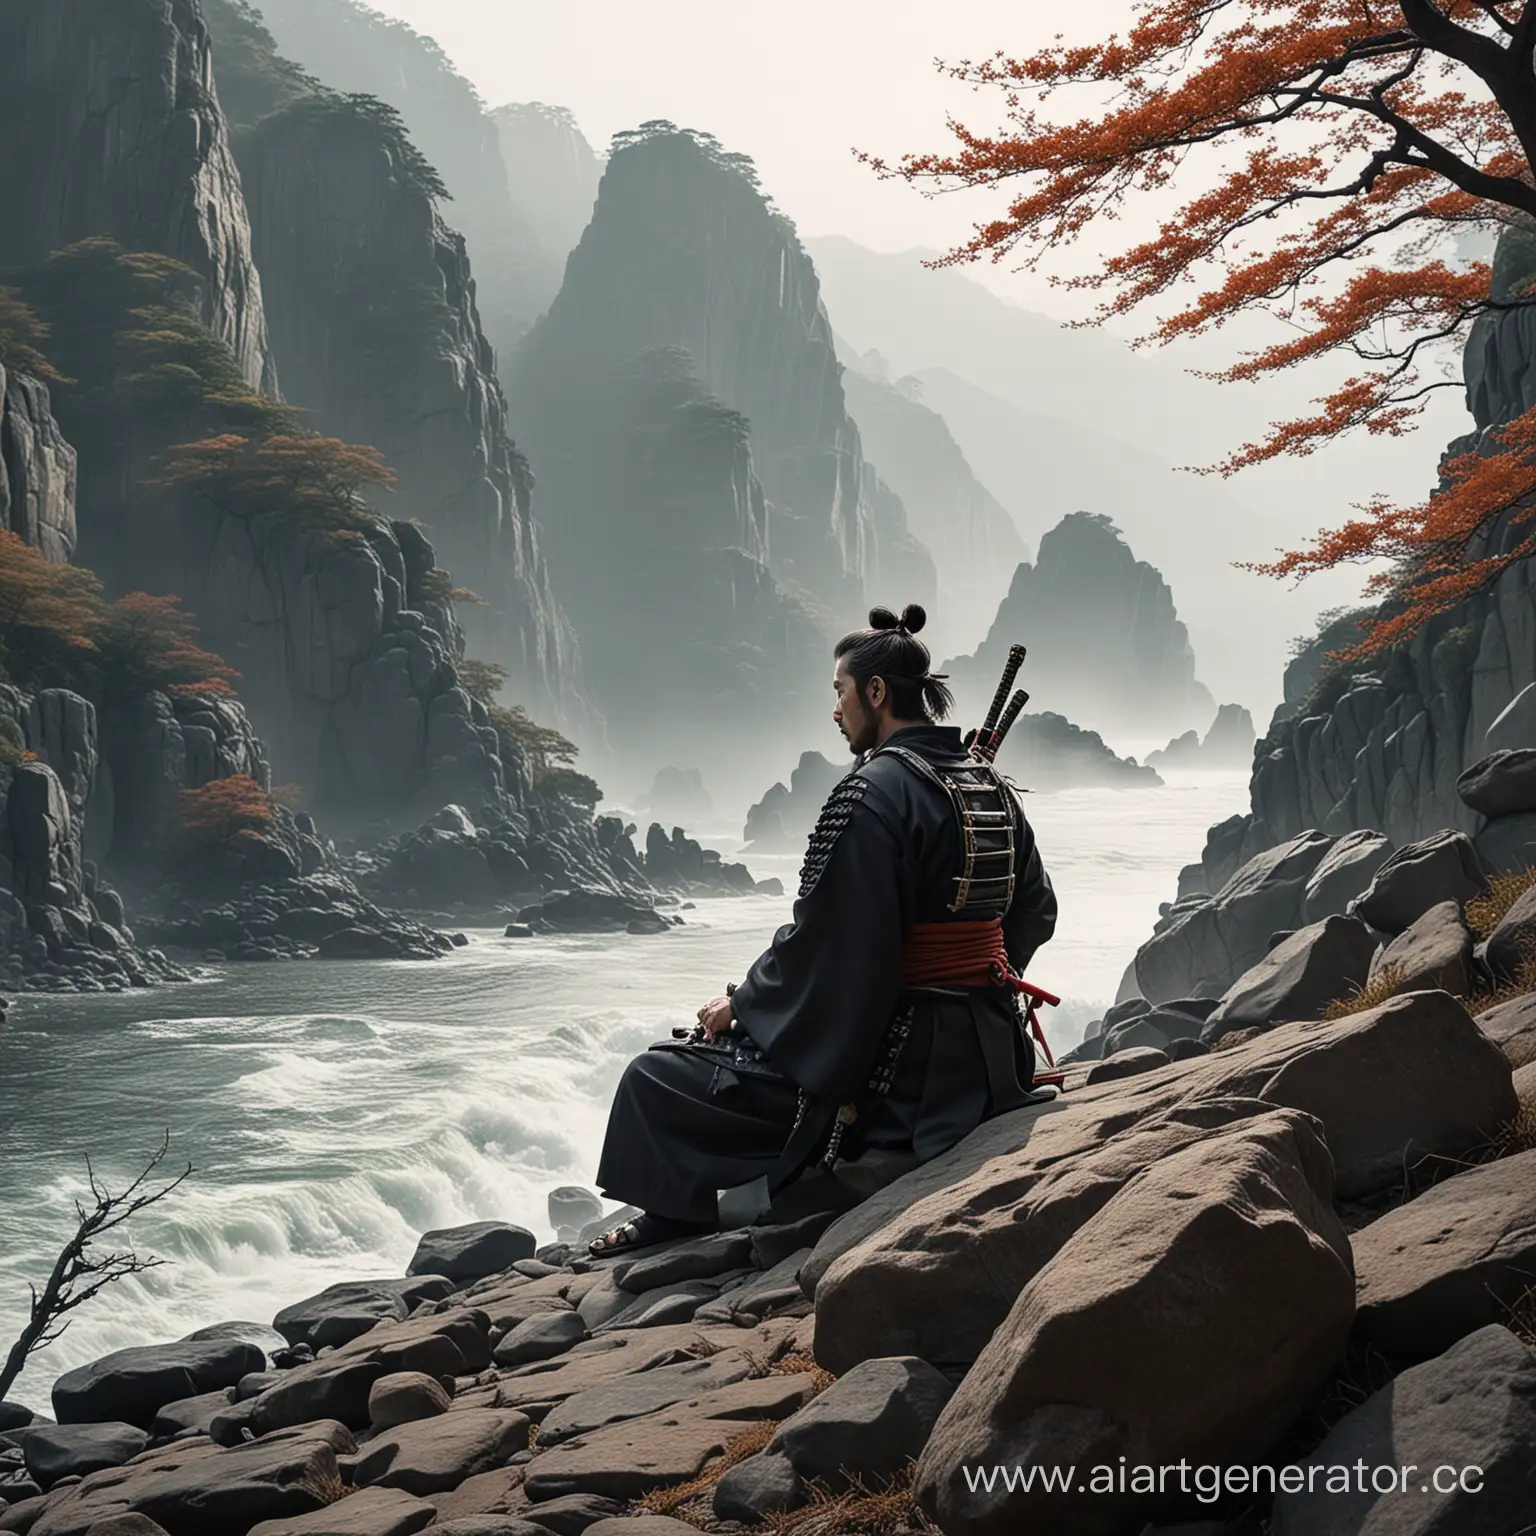 Solitary-Samurai-Contemplating-on-Rocky-Cliff